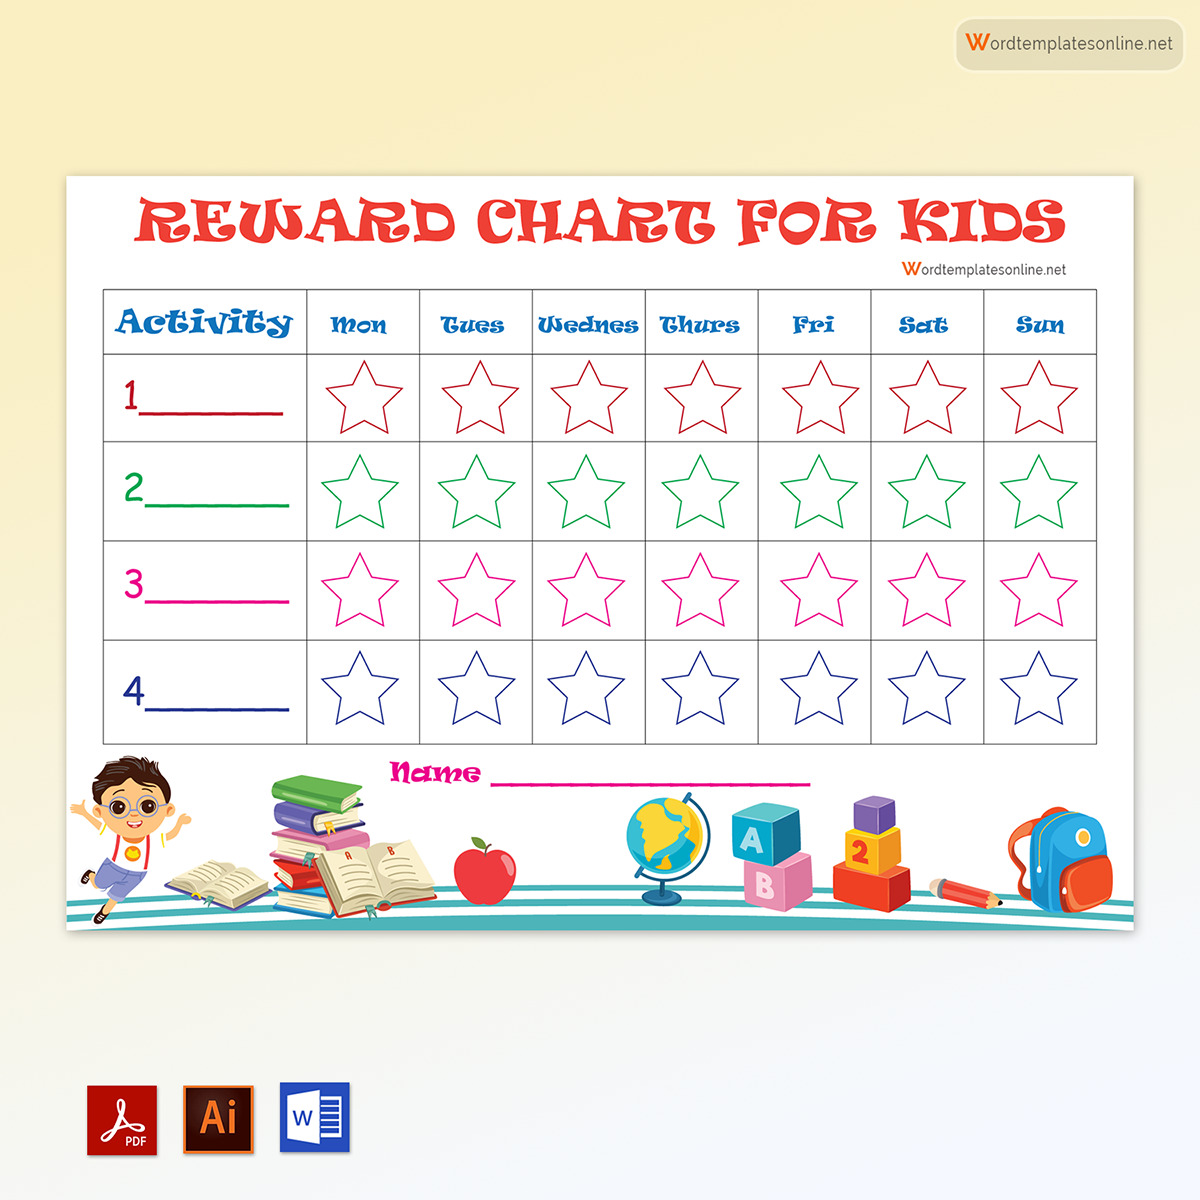 reward charts for kids